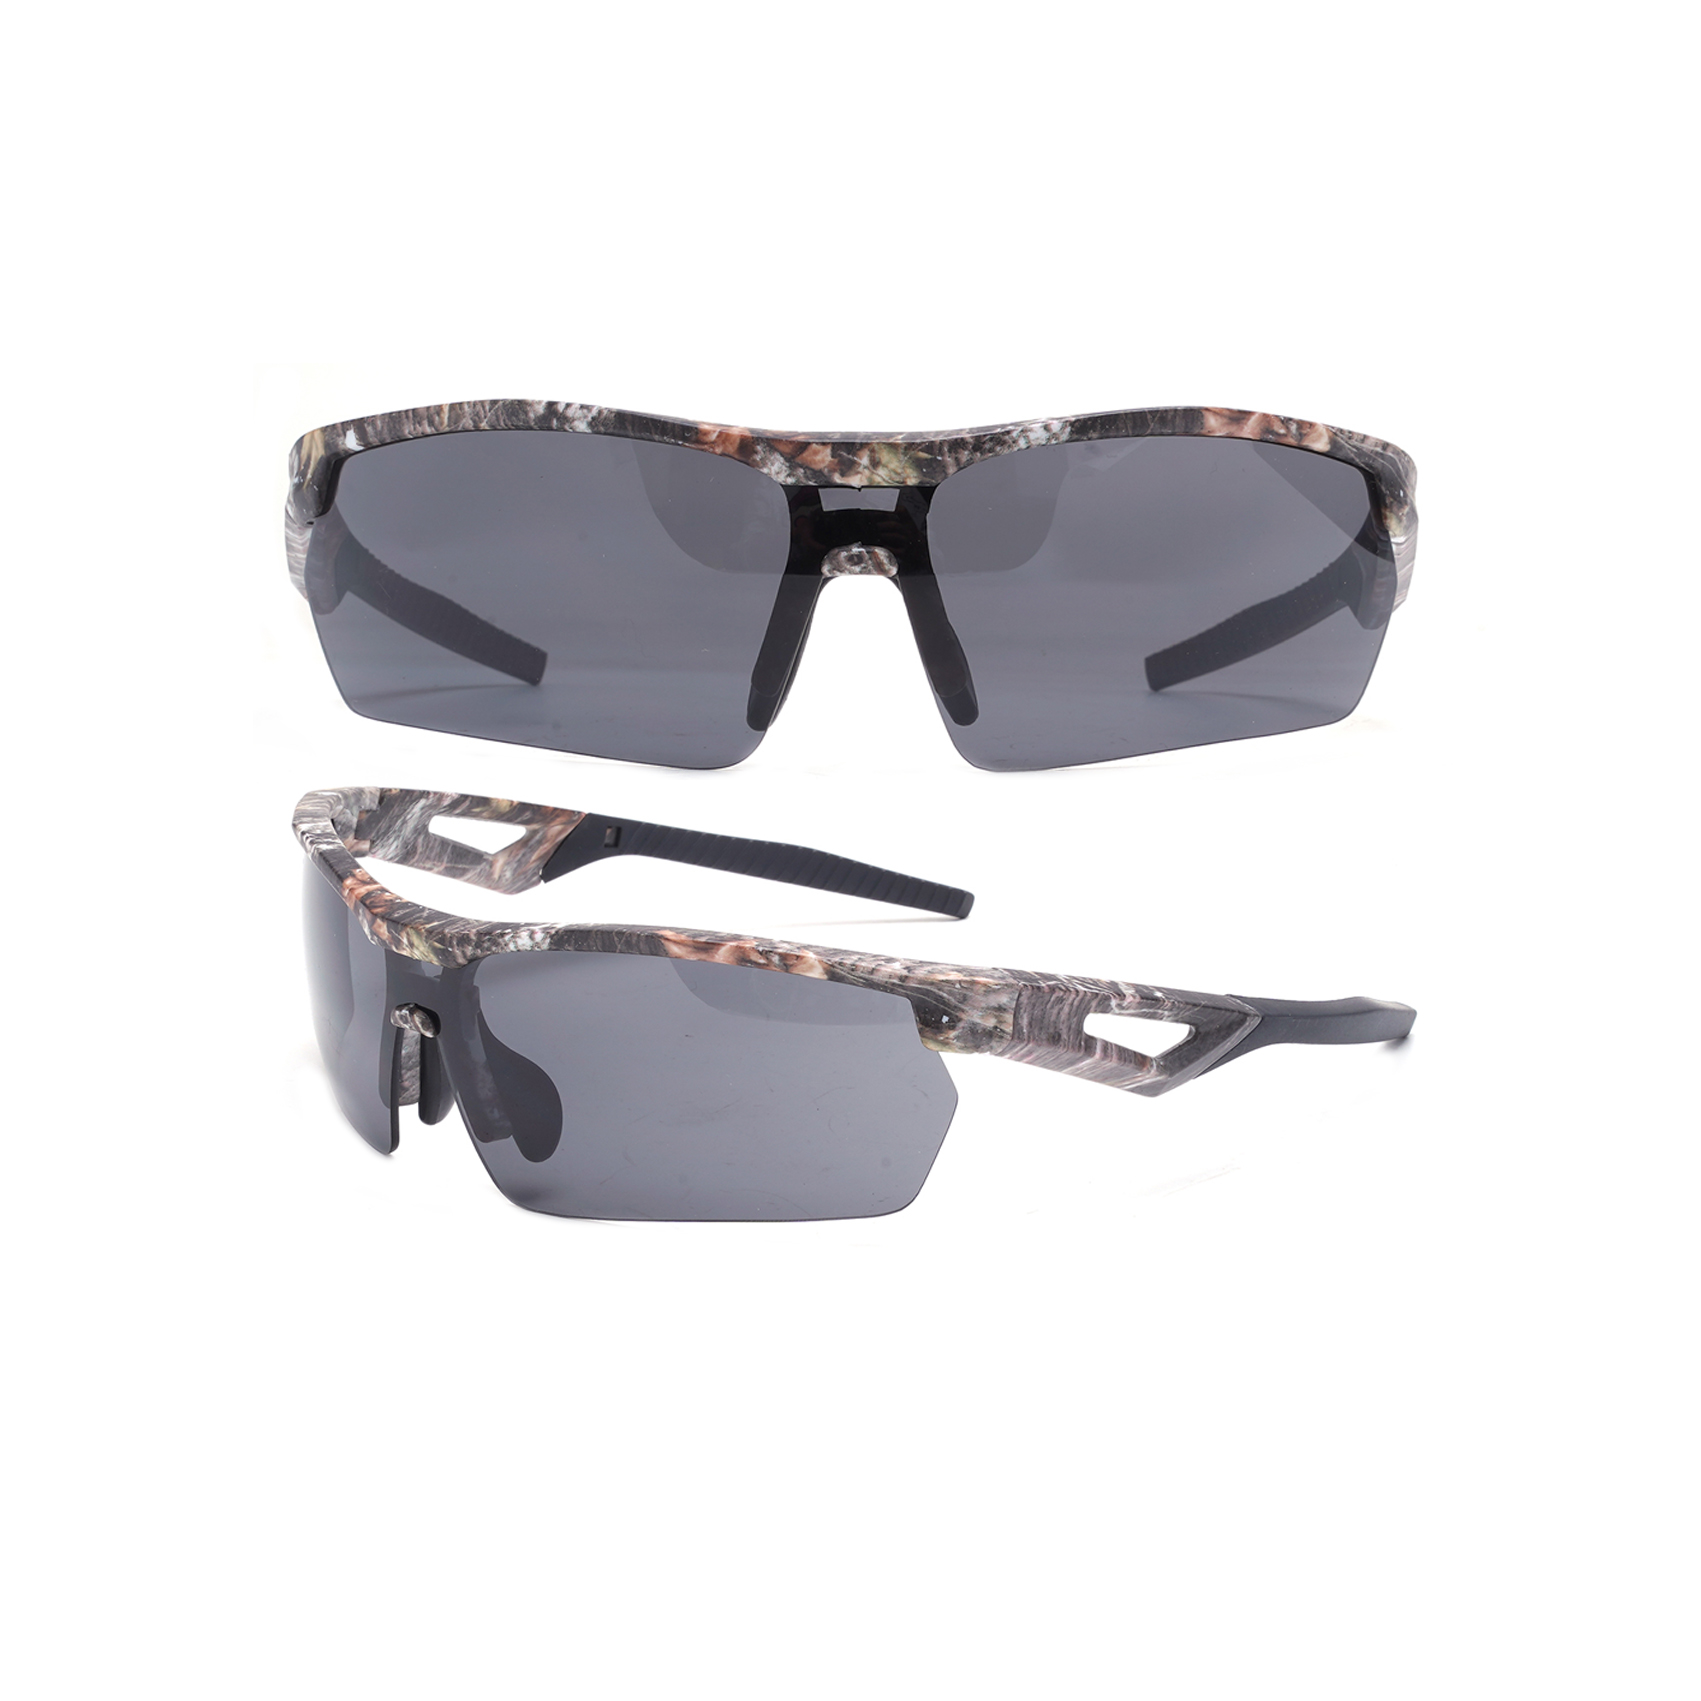 Half-frame Camouflage Mirrored Sport Sunglasses Wholesale Fashion Sport Sunglasses Manufacturer